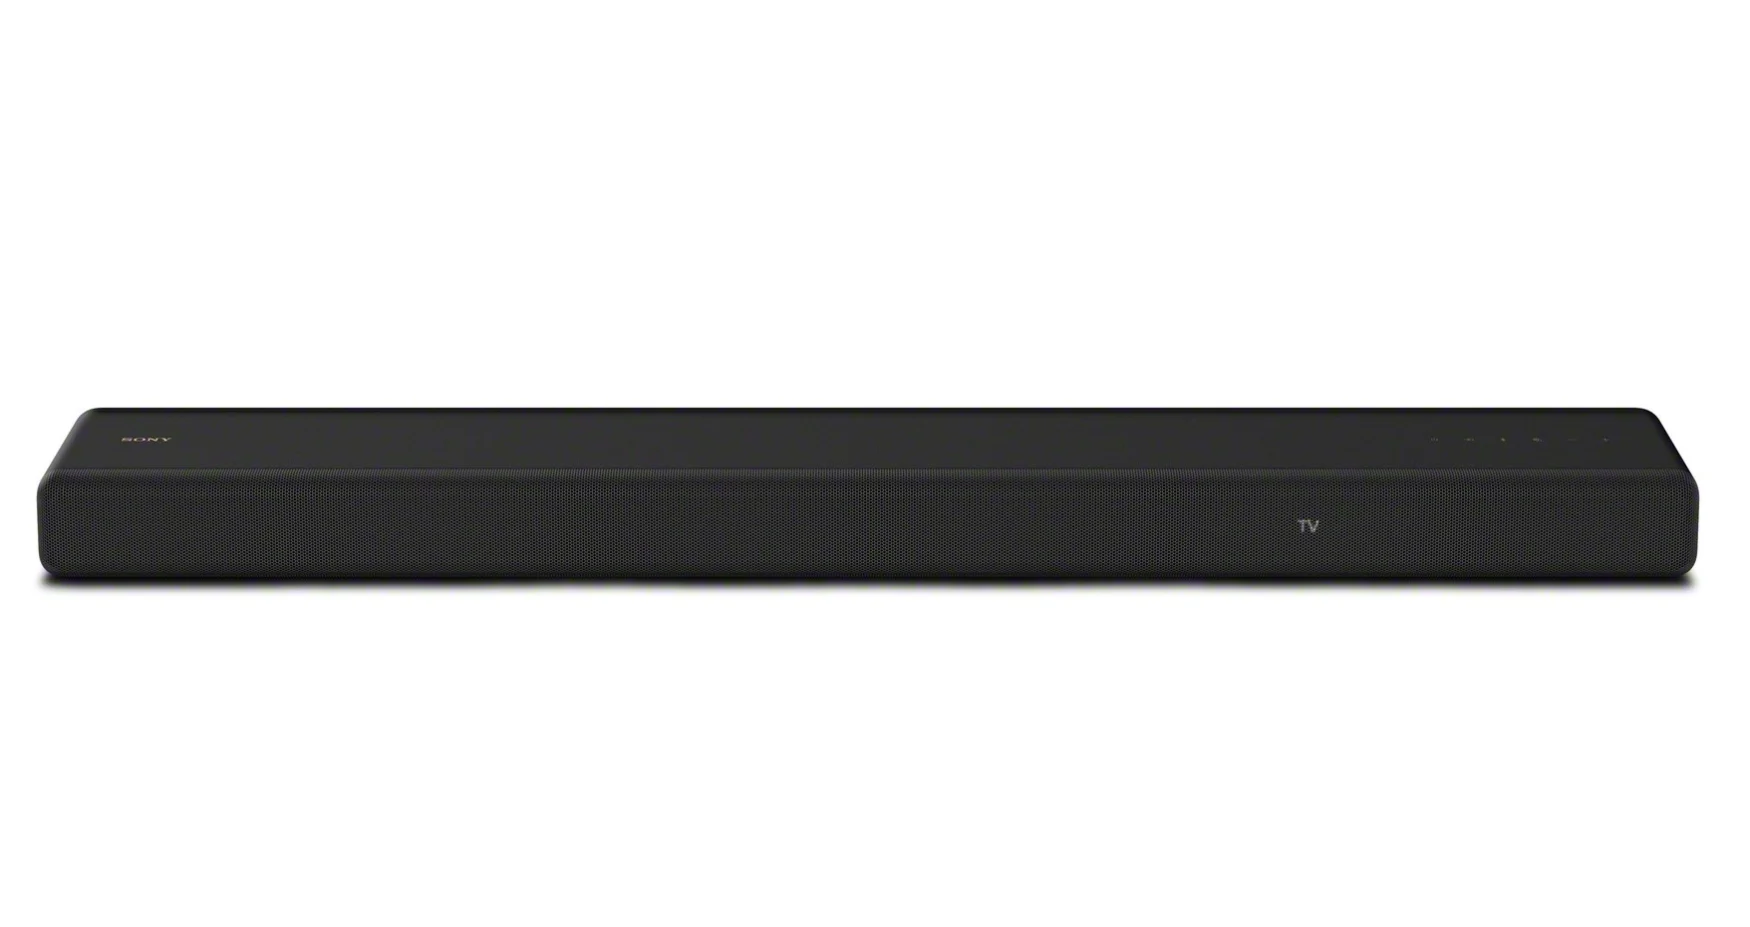 Sony's HT-A3000 soundbar